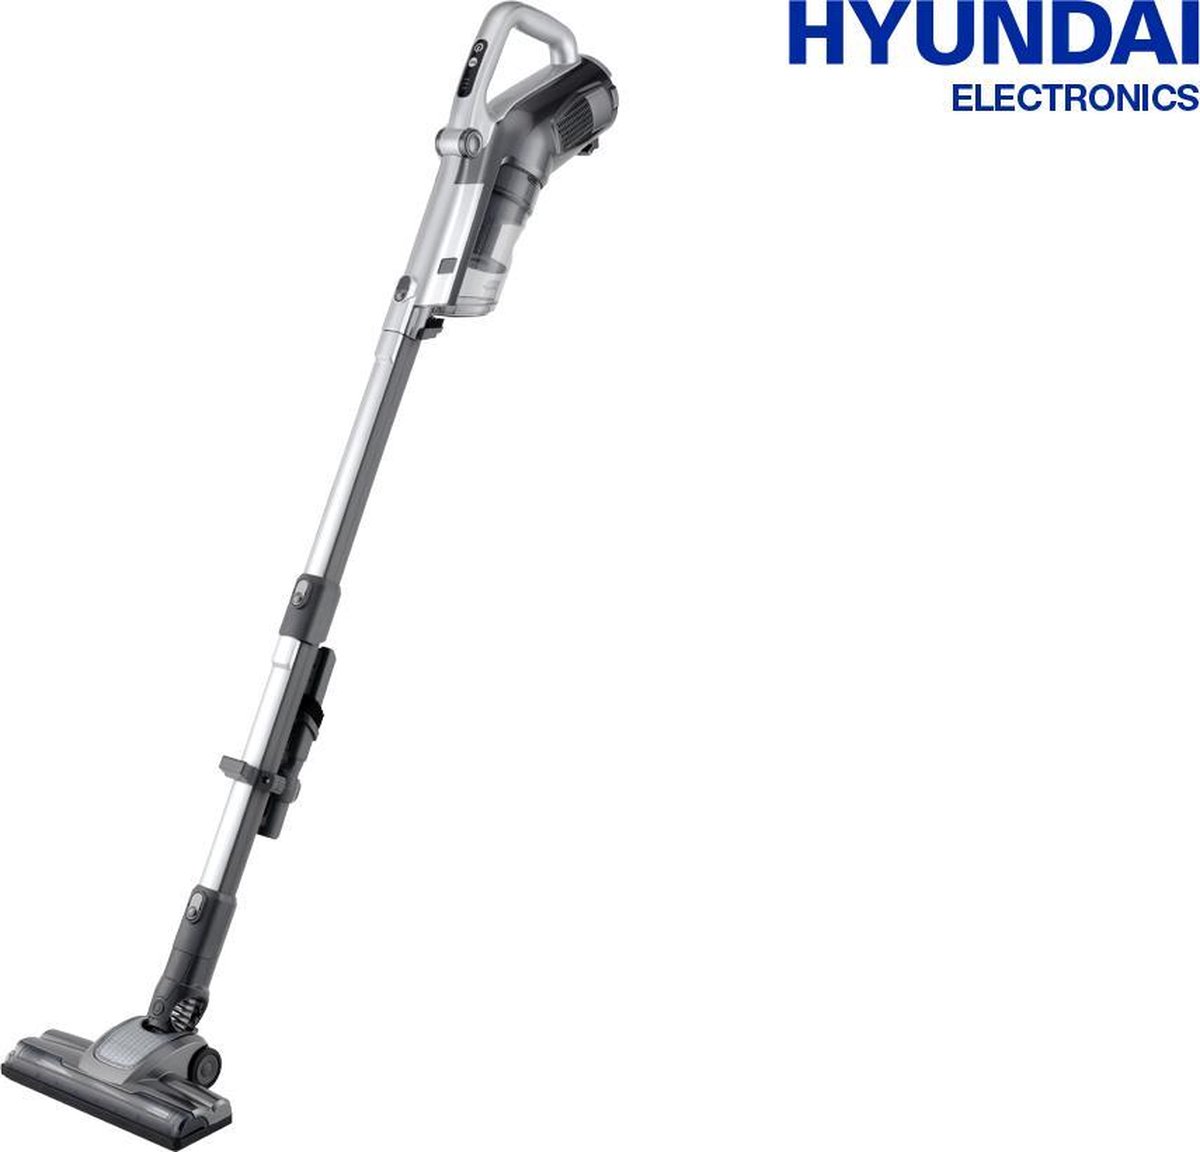 Hyundai - Aspirateur balai sans fil Premium 9-1 - 130 watts - Argent/ gris  | bol